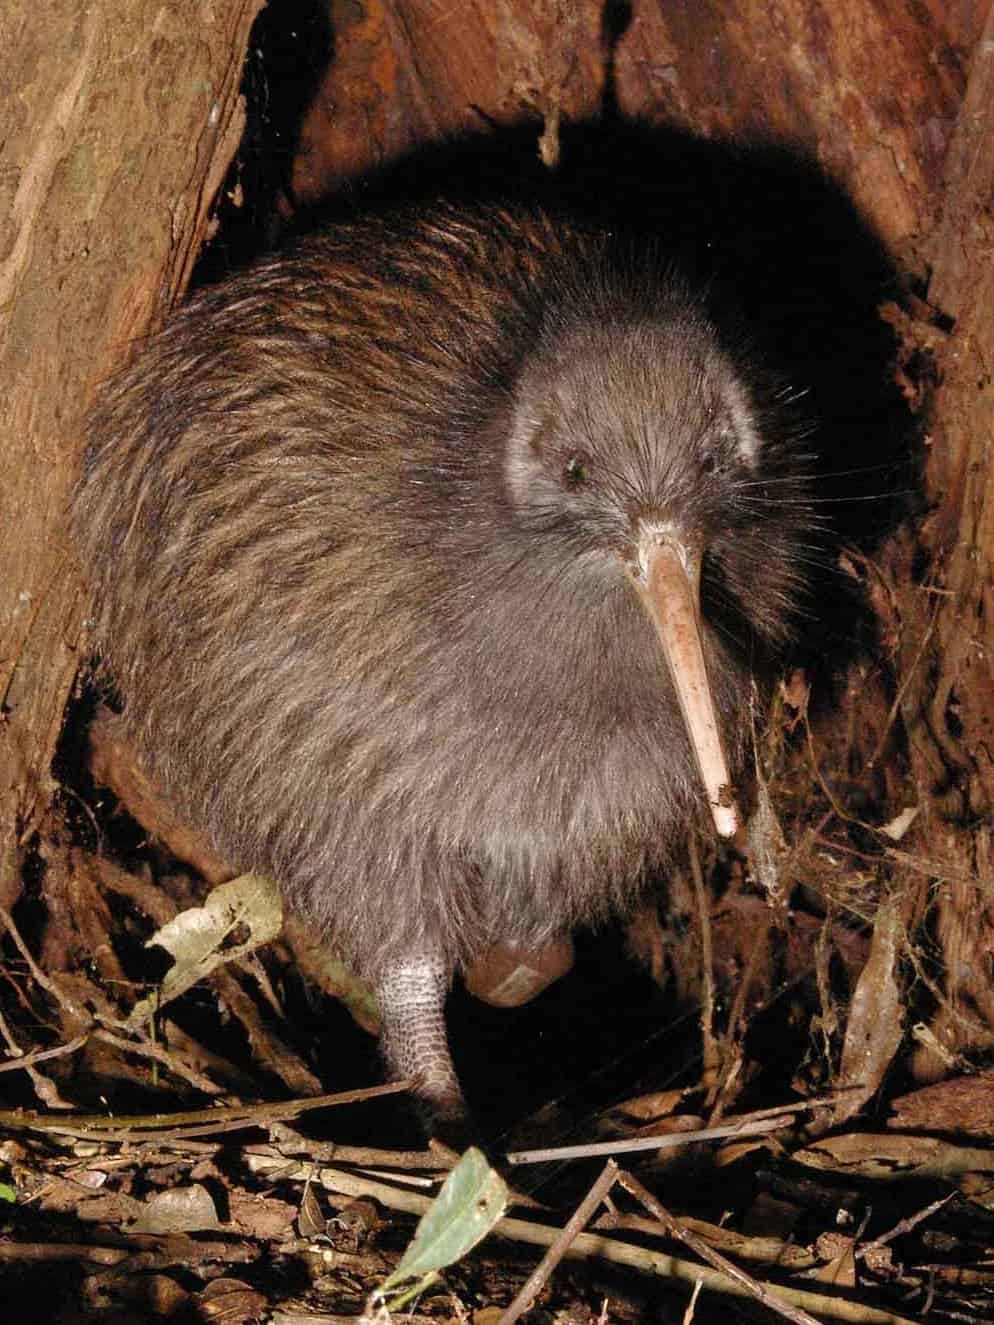 A kiwi bird. Image credits: Maungatautari Ecological Island Trust.